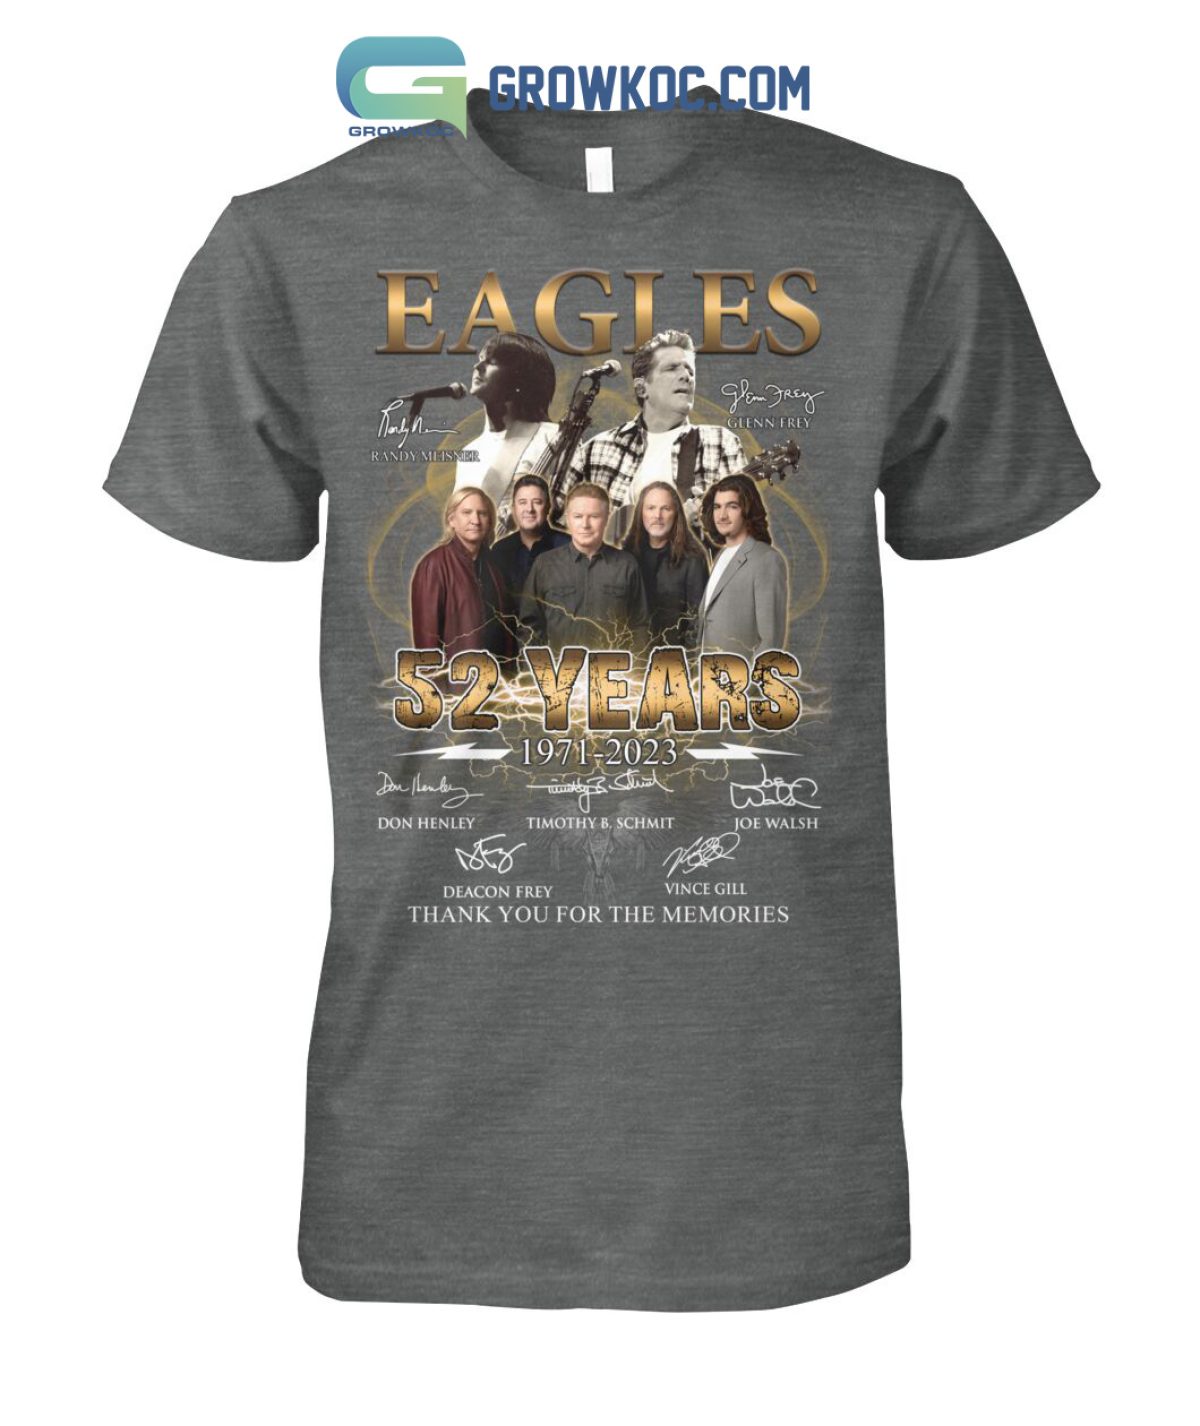 Eagles 52 Years 1971 2023 Memories T Shirt - Growkoc